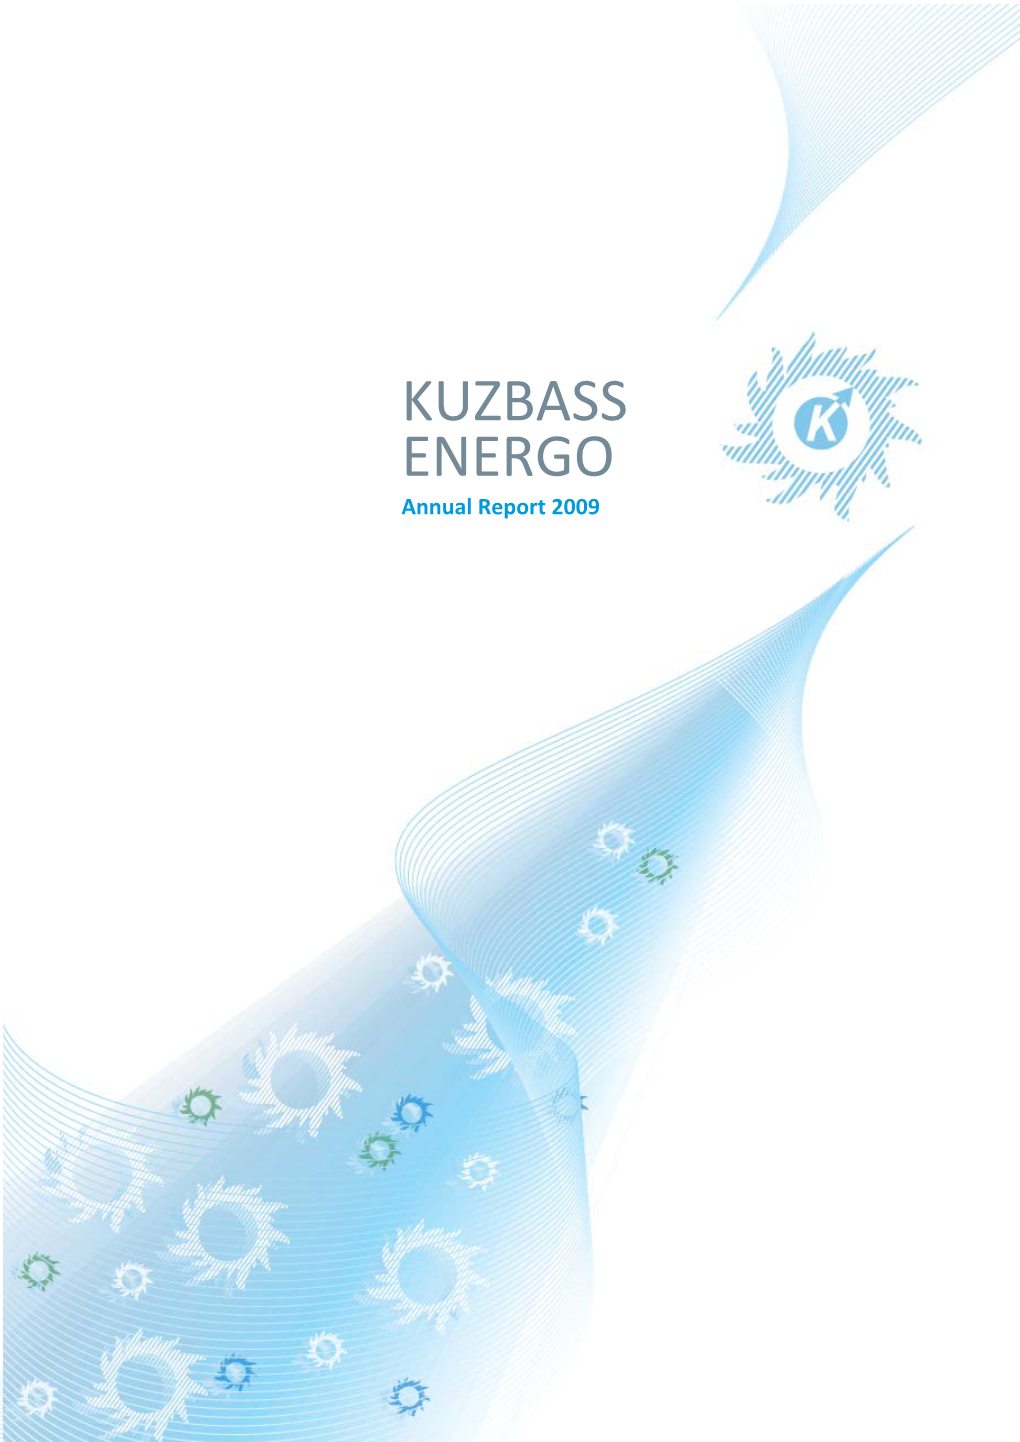 KUZBASS ENERGO Annual Report 2009